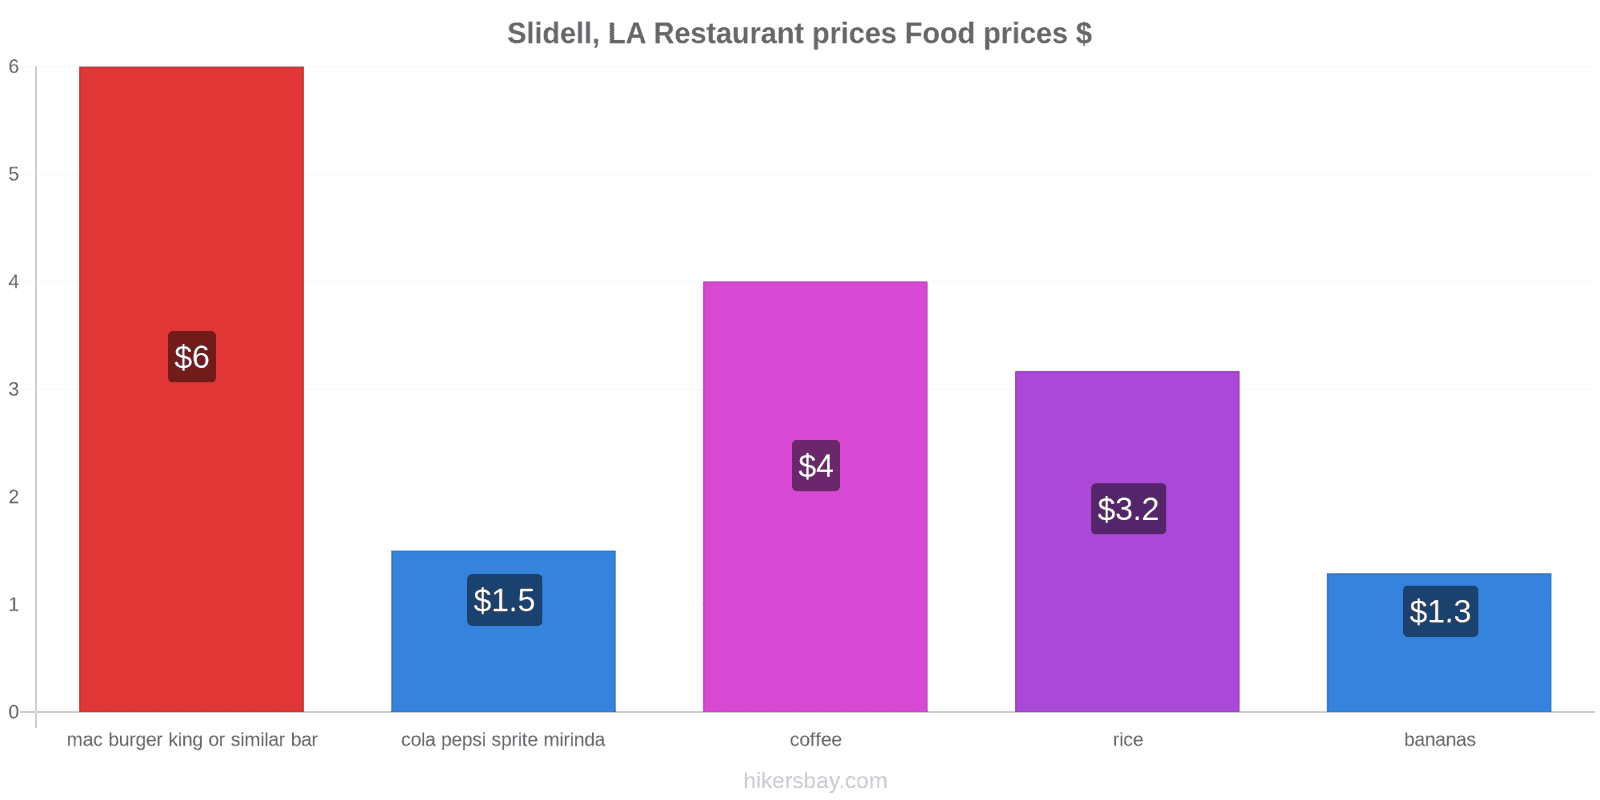 Slidell, LA price changes hikersbay.com